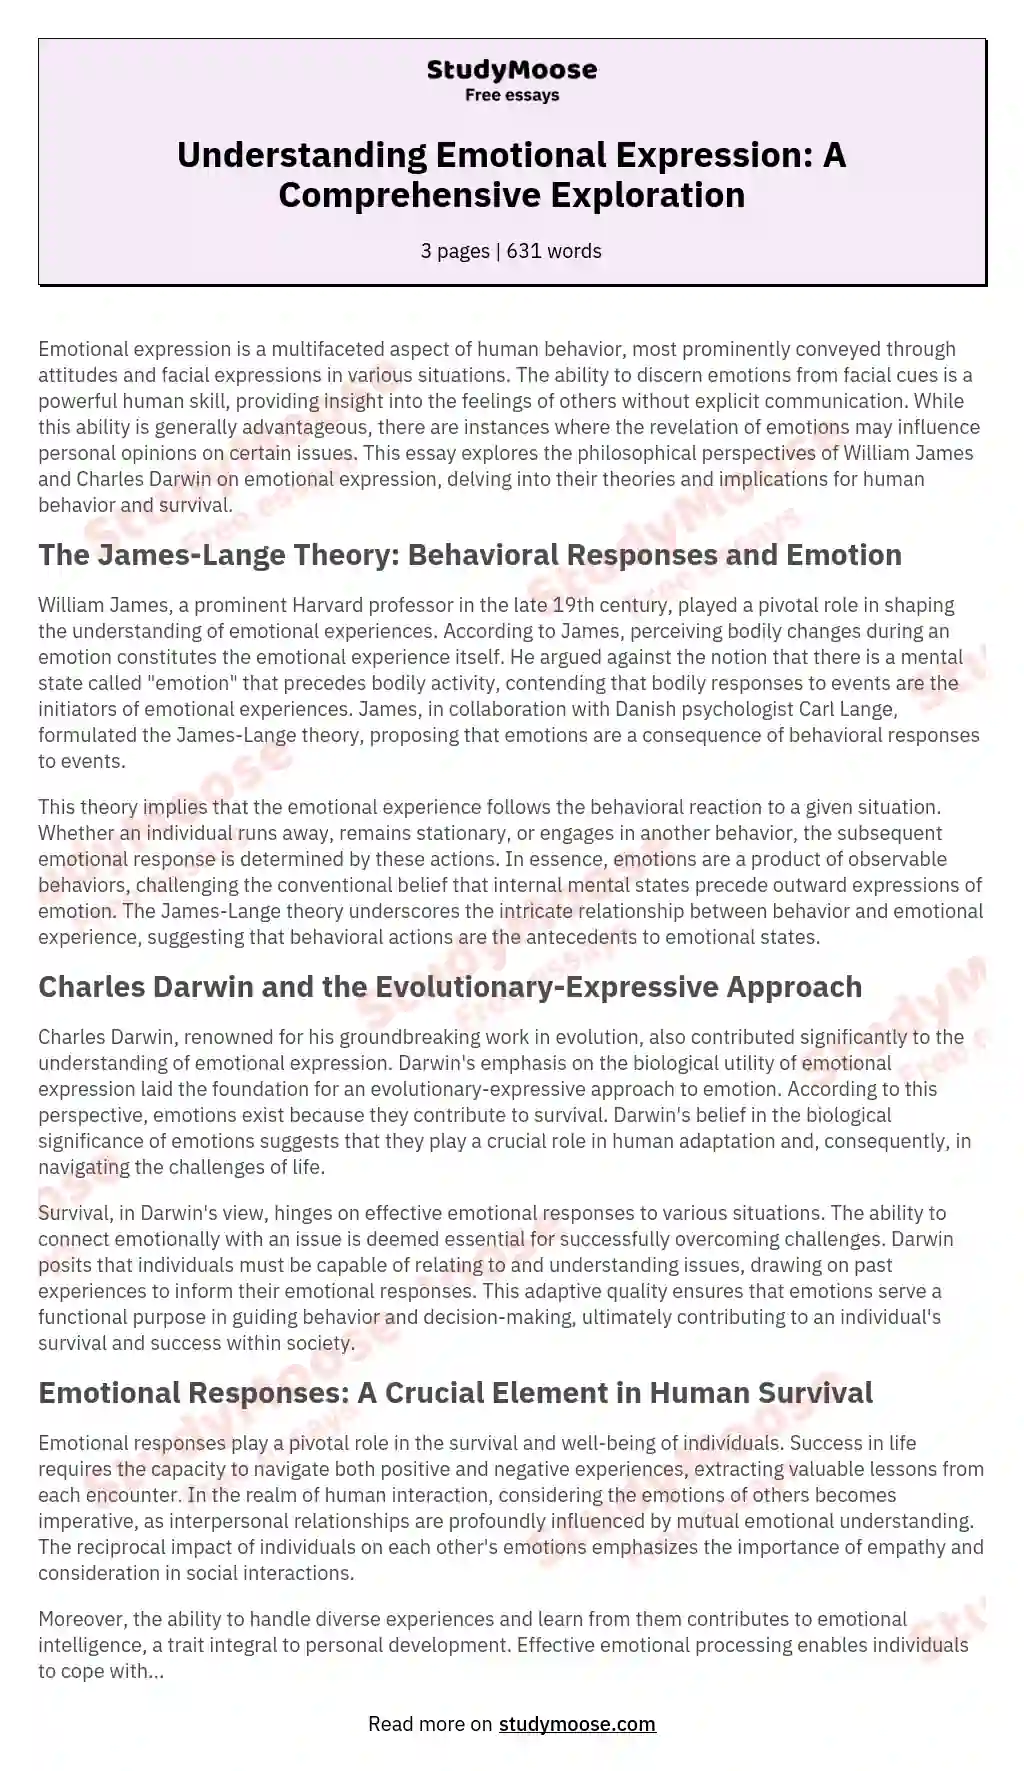 Understanding Emotional Expression: A Comprehensive Exploration essay